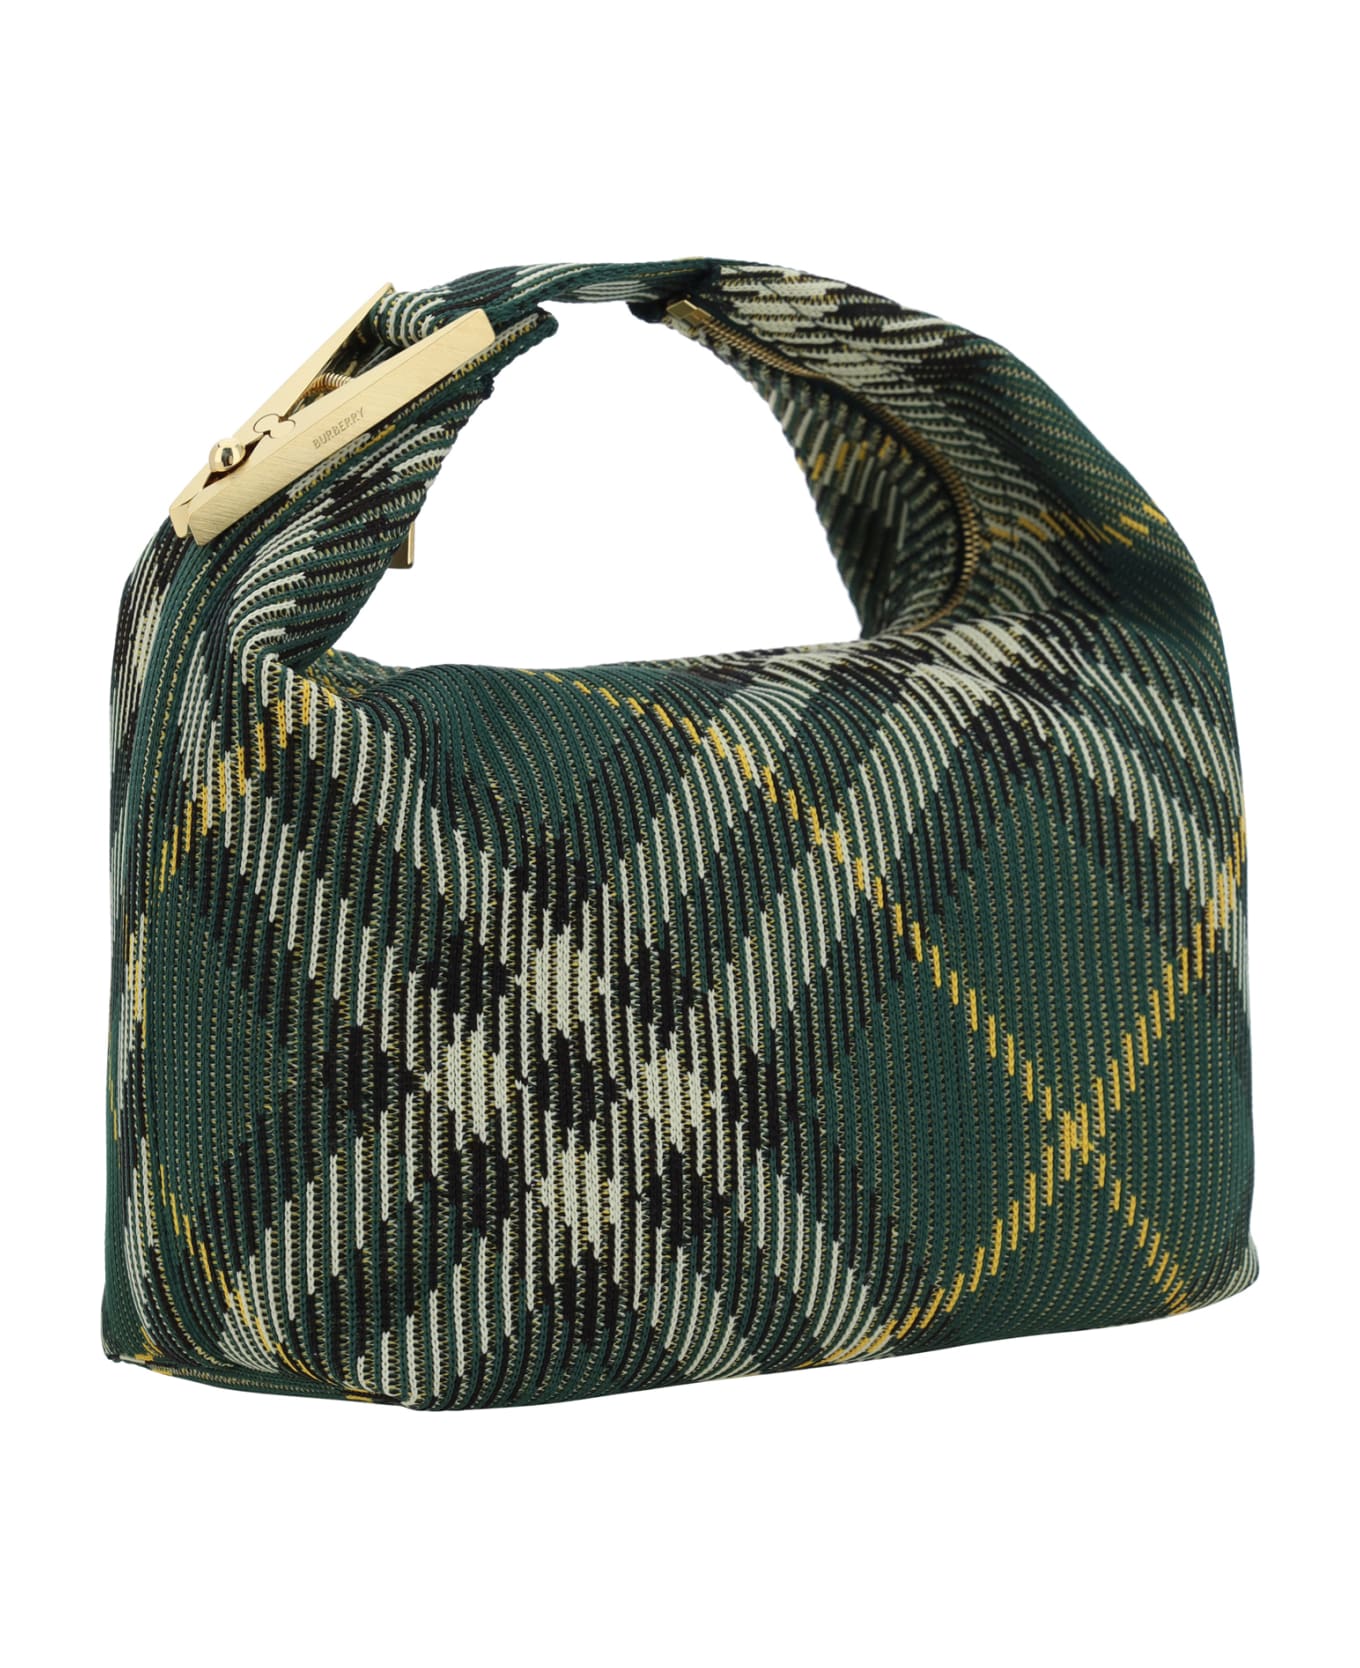 Burberry Handbag - Green